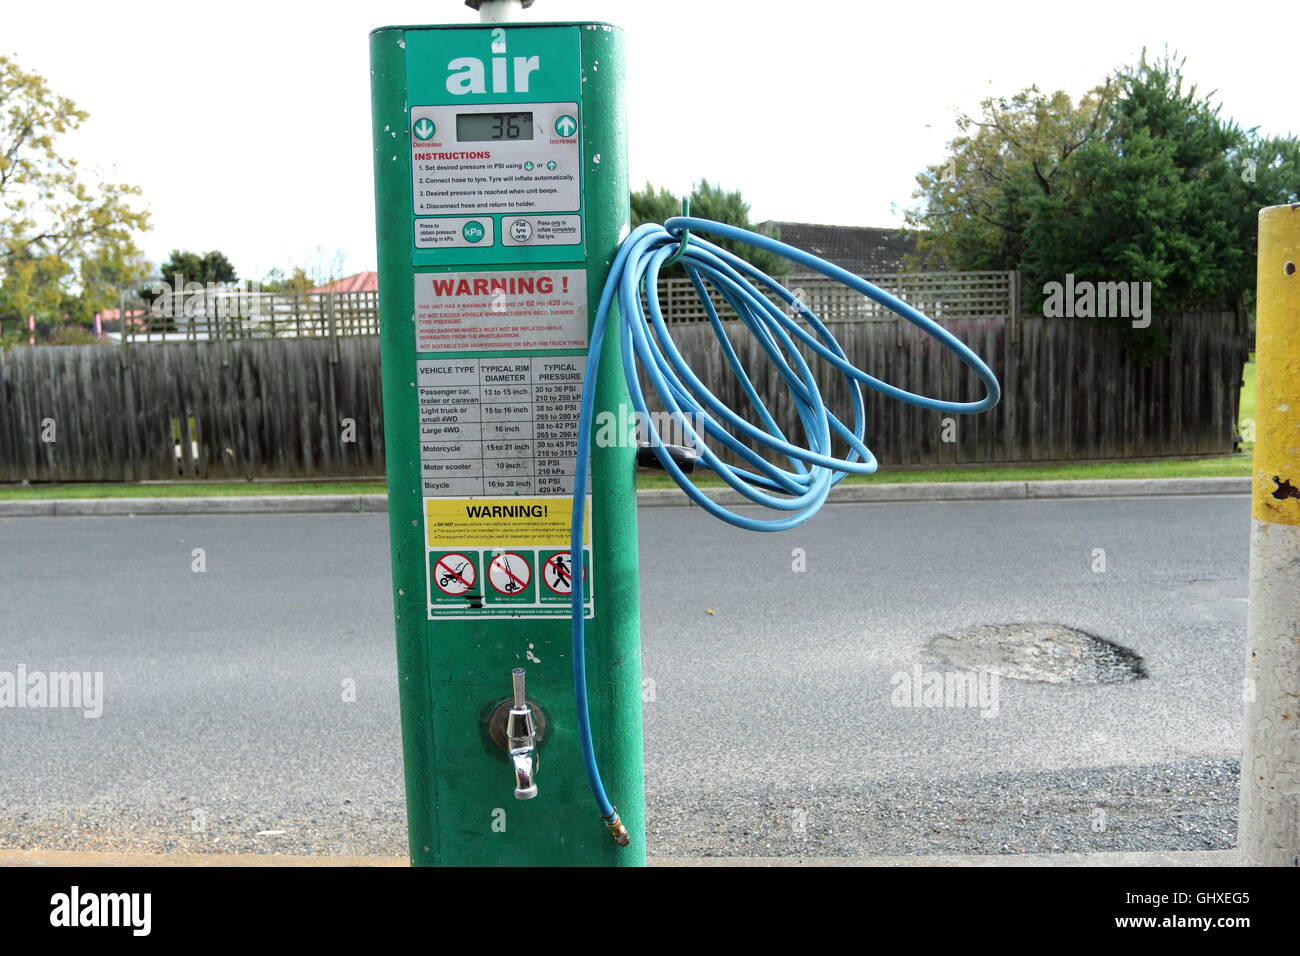 Air Pressure pump hose at BP Petrol Station in Melbourne Victoria Australia Stock Photo